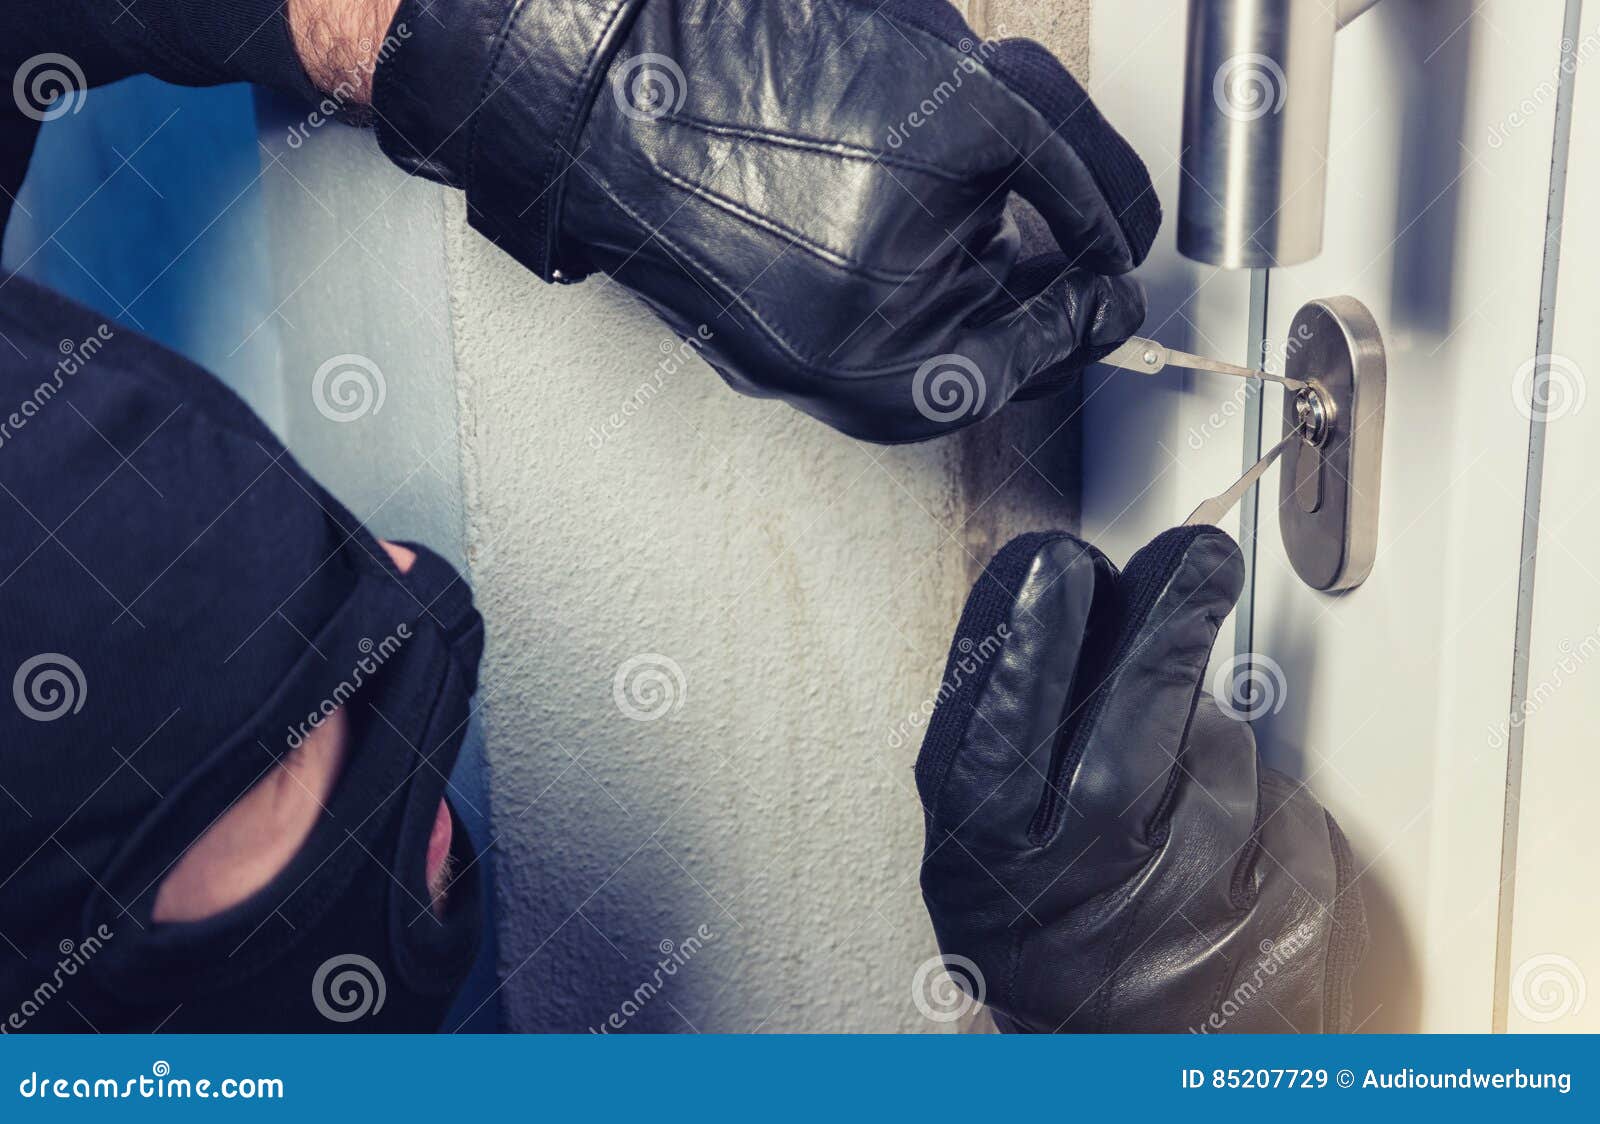 intruder or burglar with lock picking tools